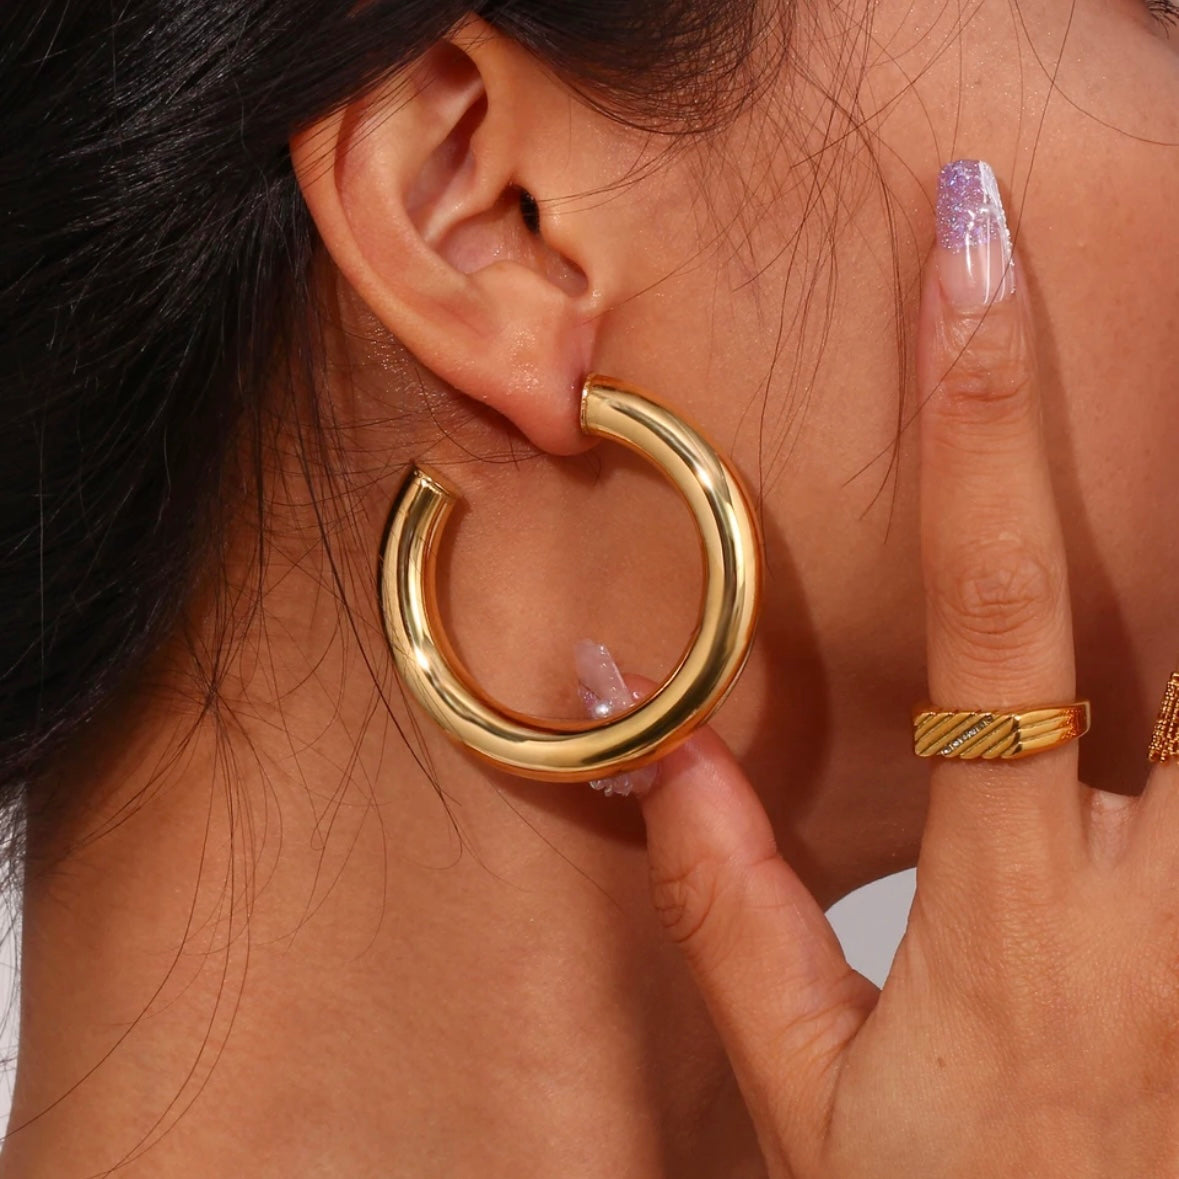 thick gold hoop earrings, Sydney australia